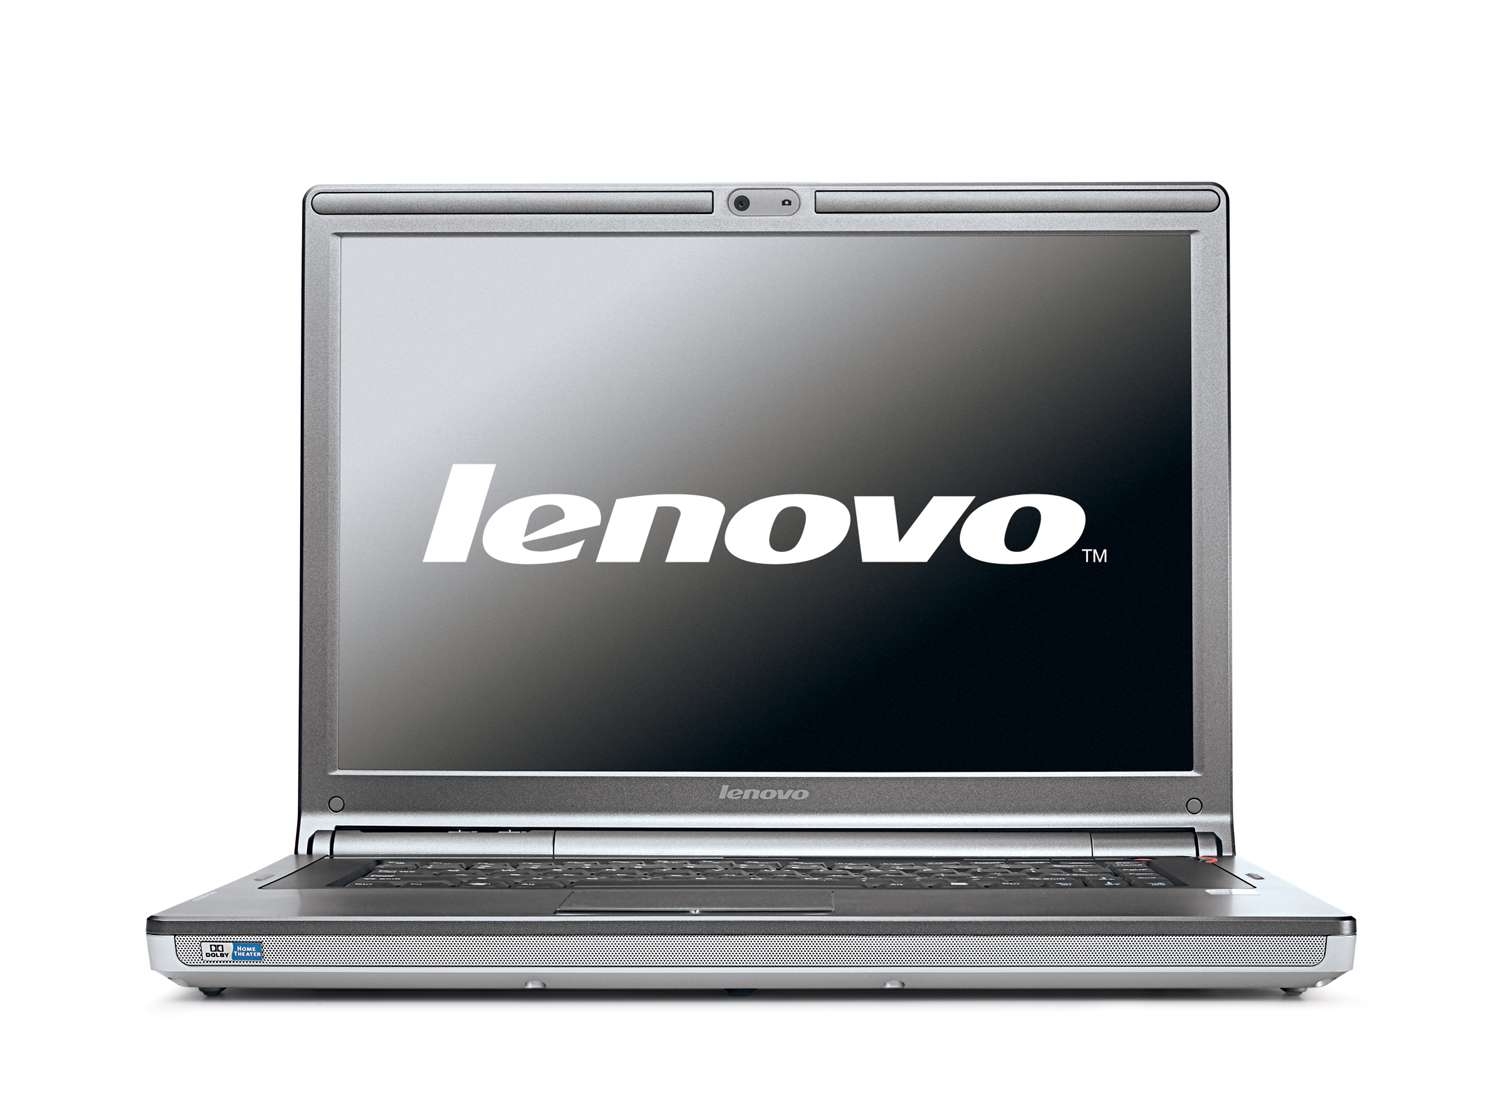 Lenovo Introduces Its Mini IdeaPad S10 Notebook  